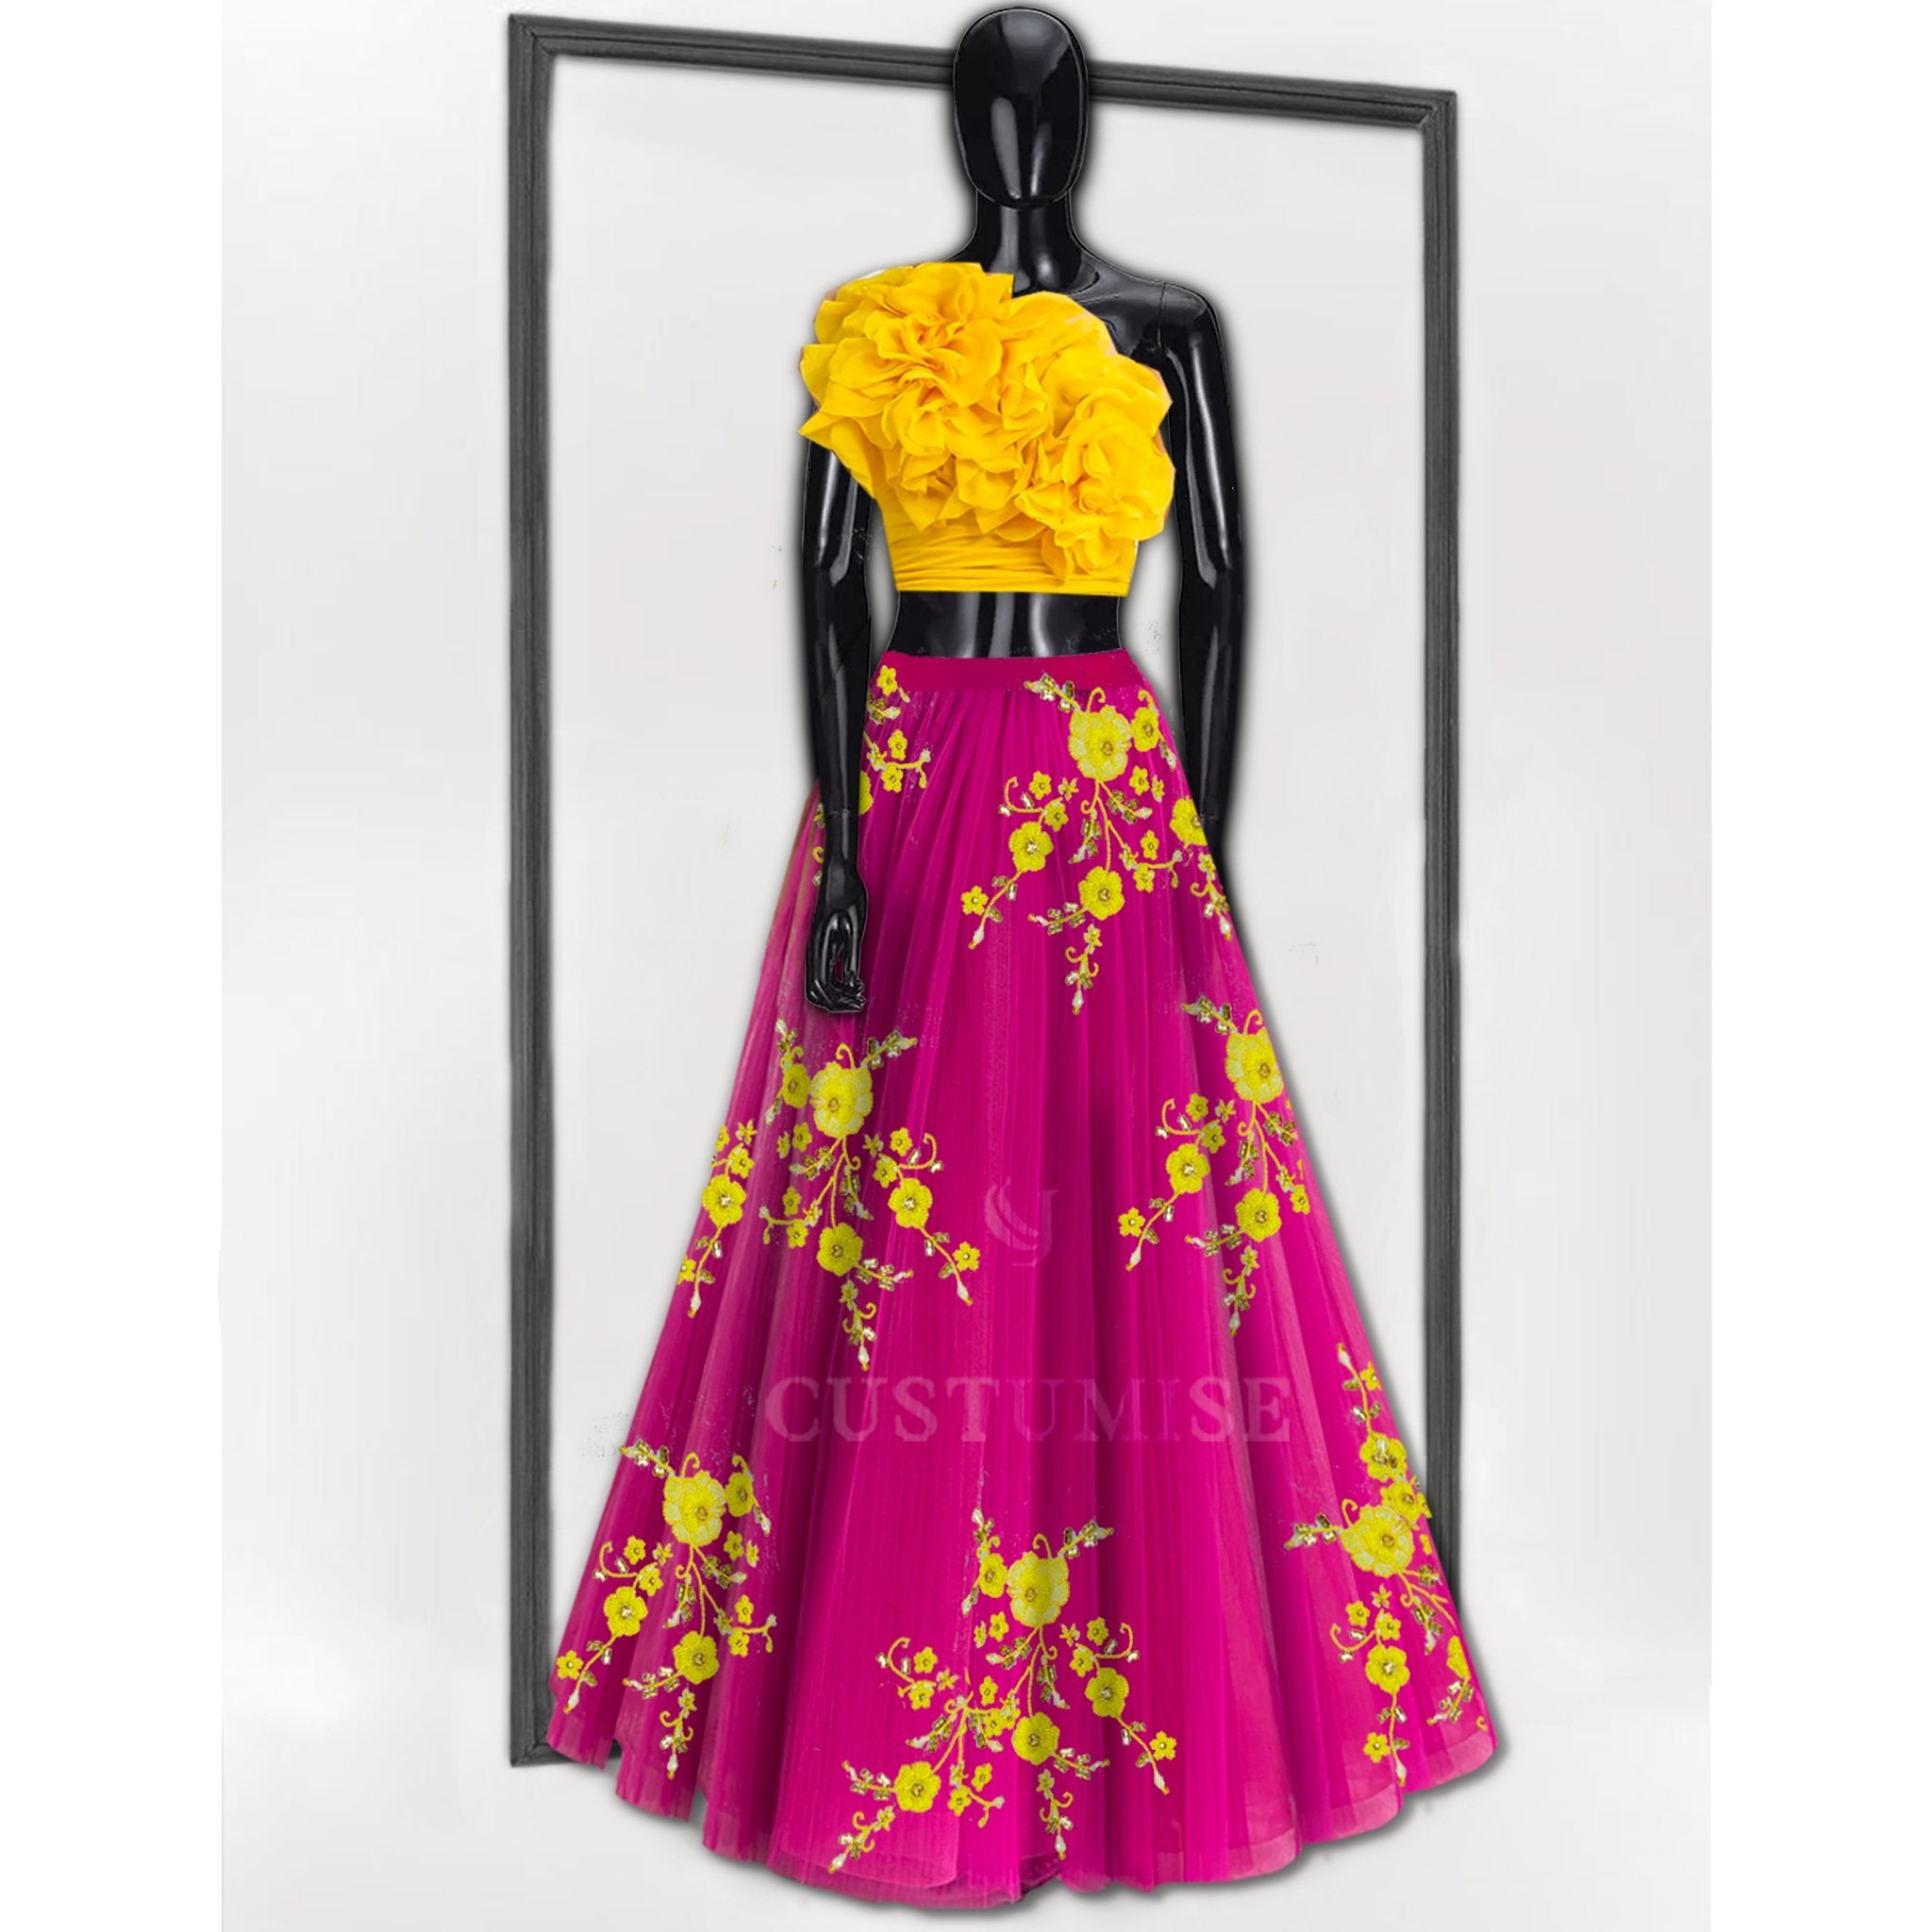 Hot Pink and Yellow Ruffled Skirt Set - Indian Designer Bridal Wedding Outfit